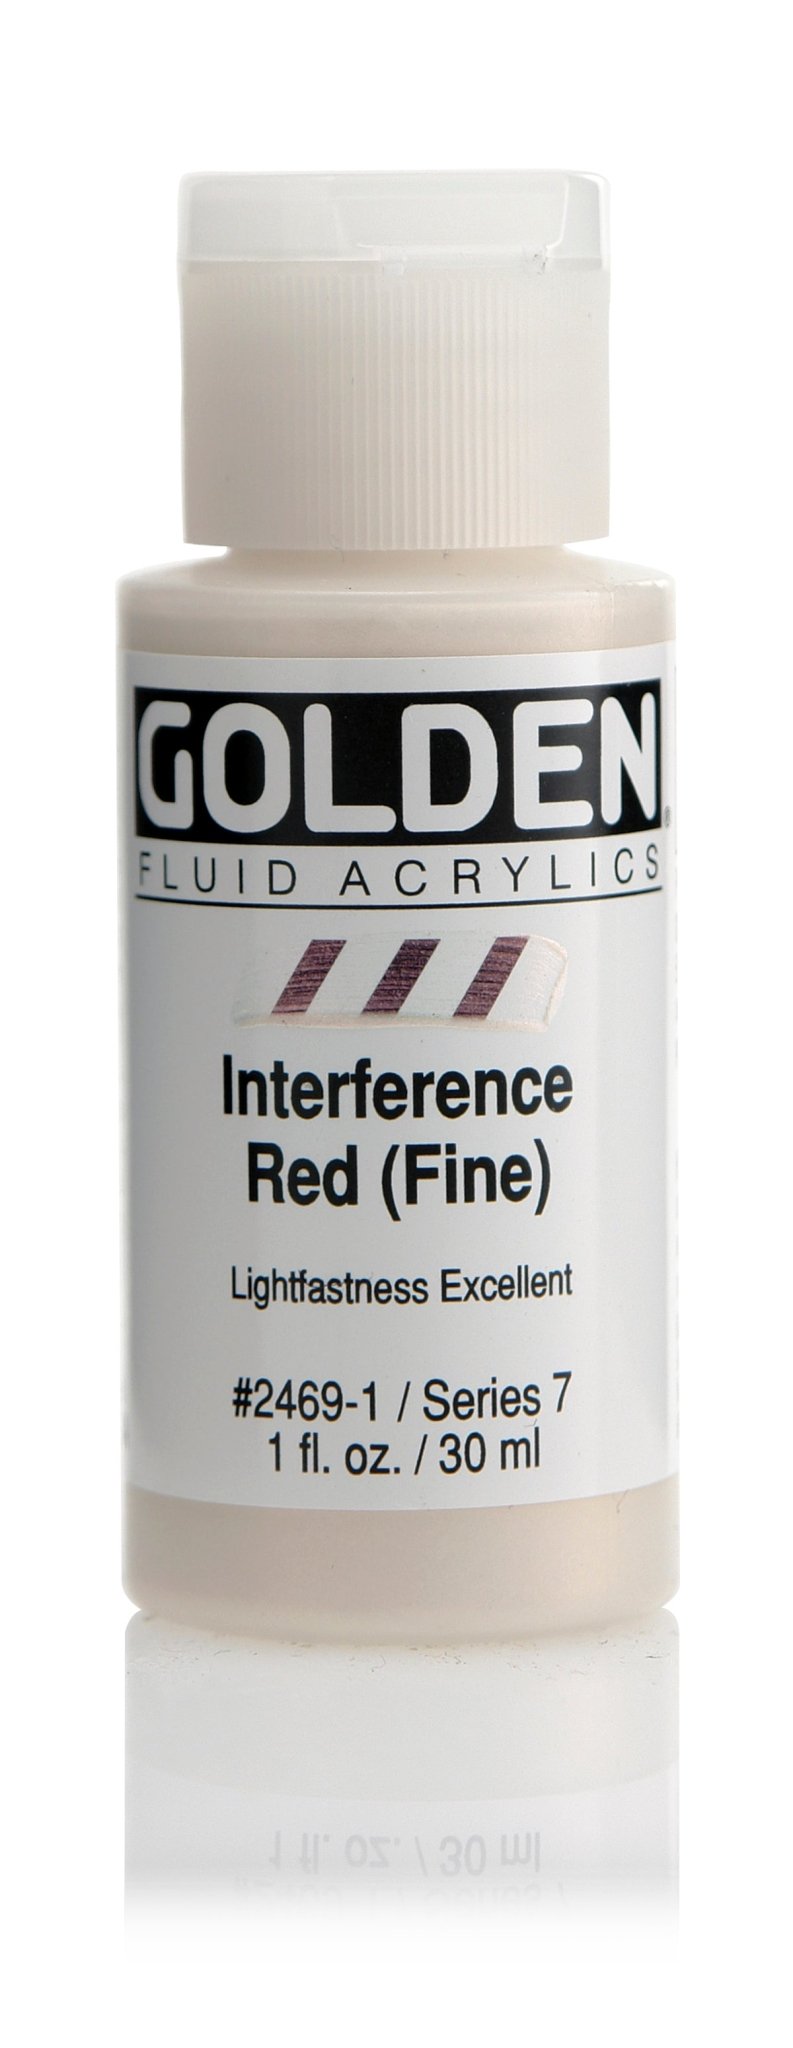 Golden Fluid Acrylics - Interference Red (Fine) - 30ml - Create A Little Magic (Pty) Ltd